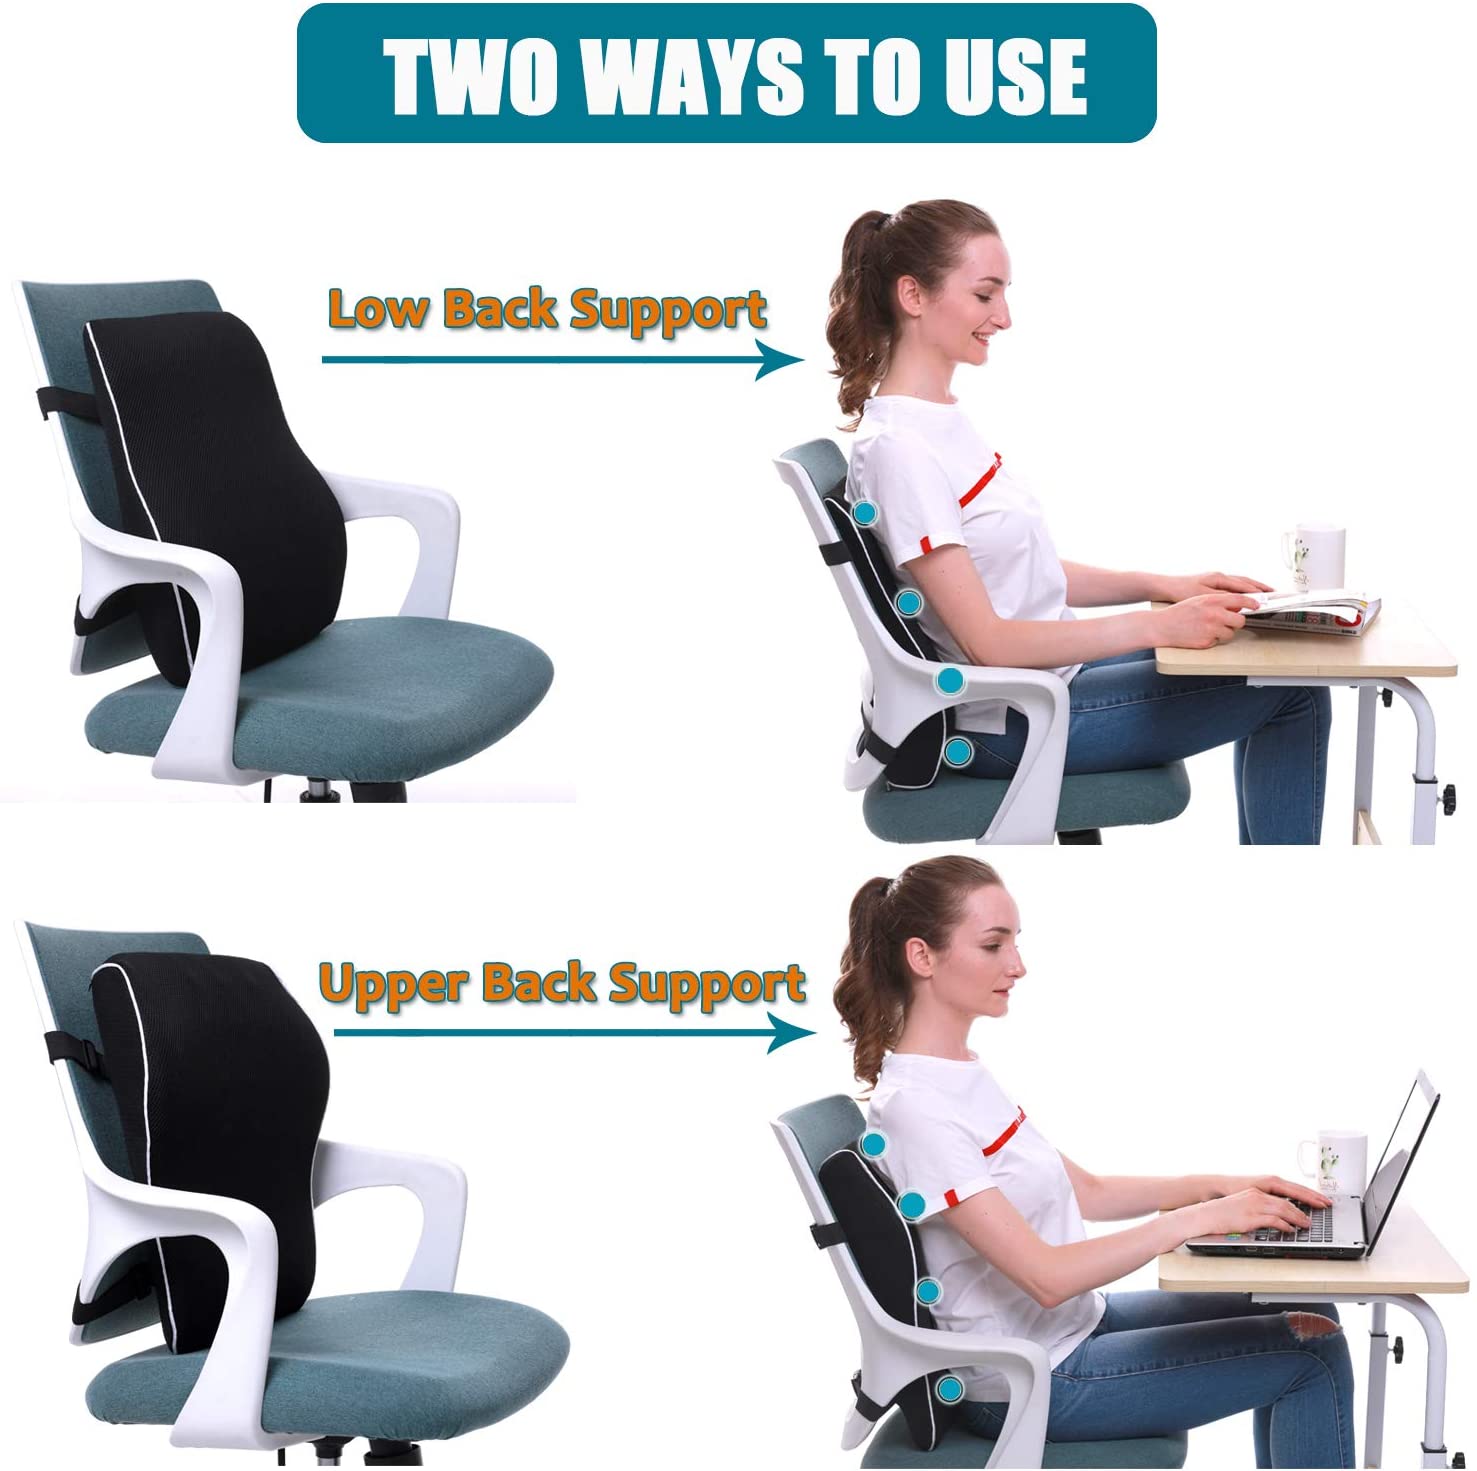 QUTOOL Lumbar Support Pillow for Office Chair – Qutool® Store